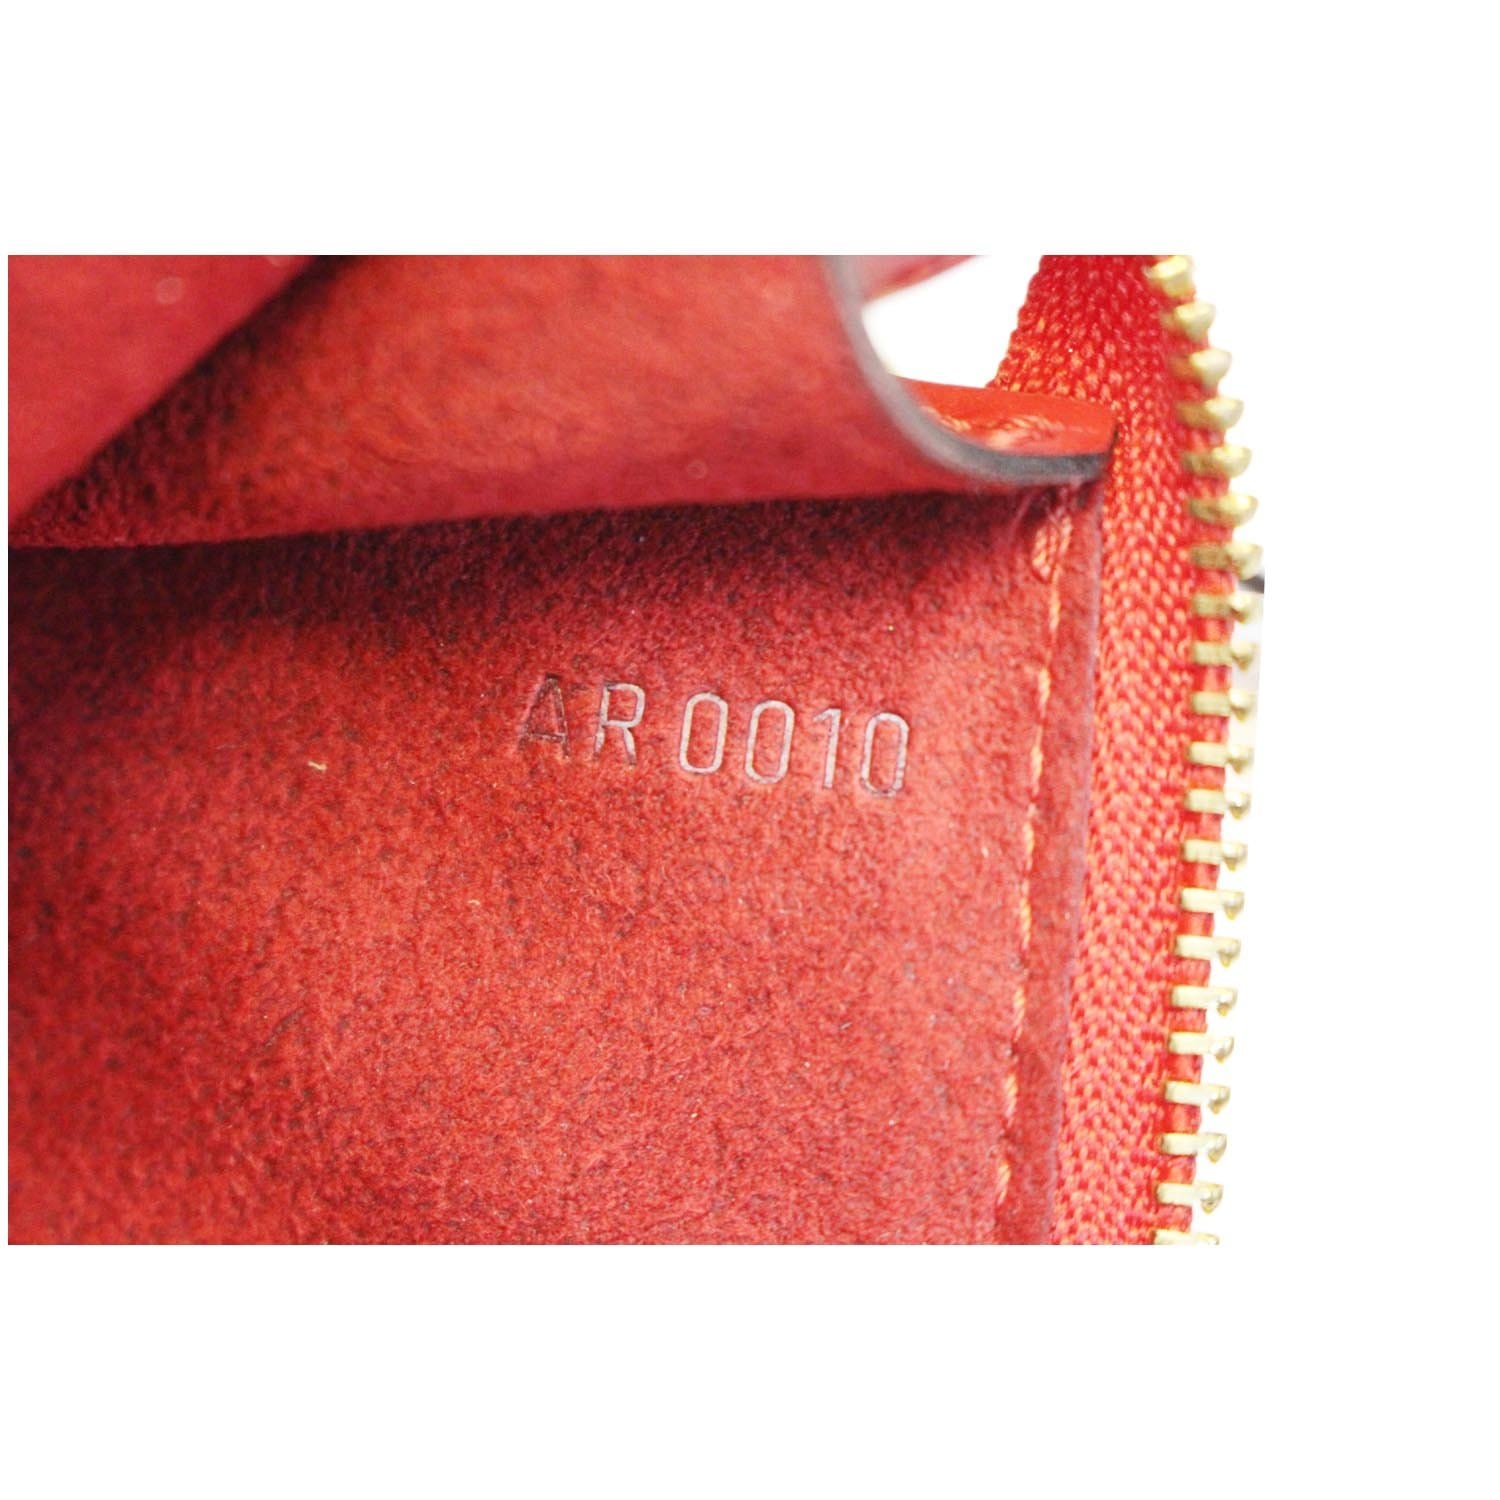 Louis Vuitton Vintage - Epi Pochette Accessoires Bag - Red - Leather and Epi  Leather Handbag - Luxury High Quality - Avvenice